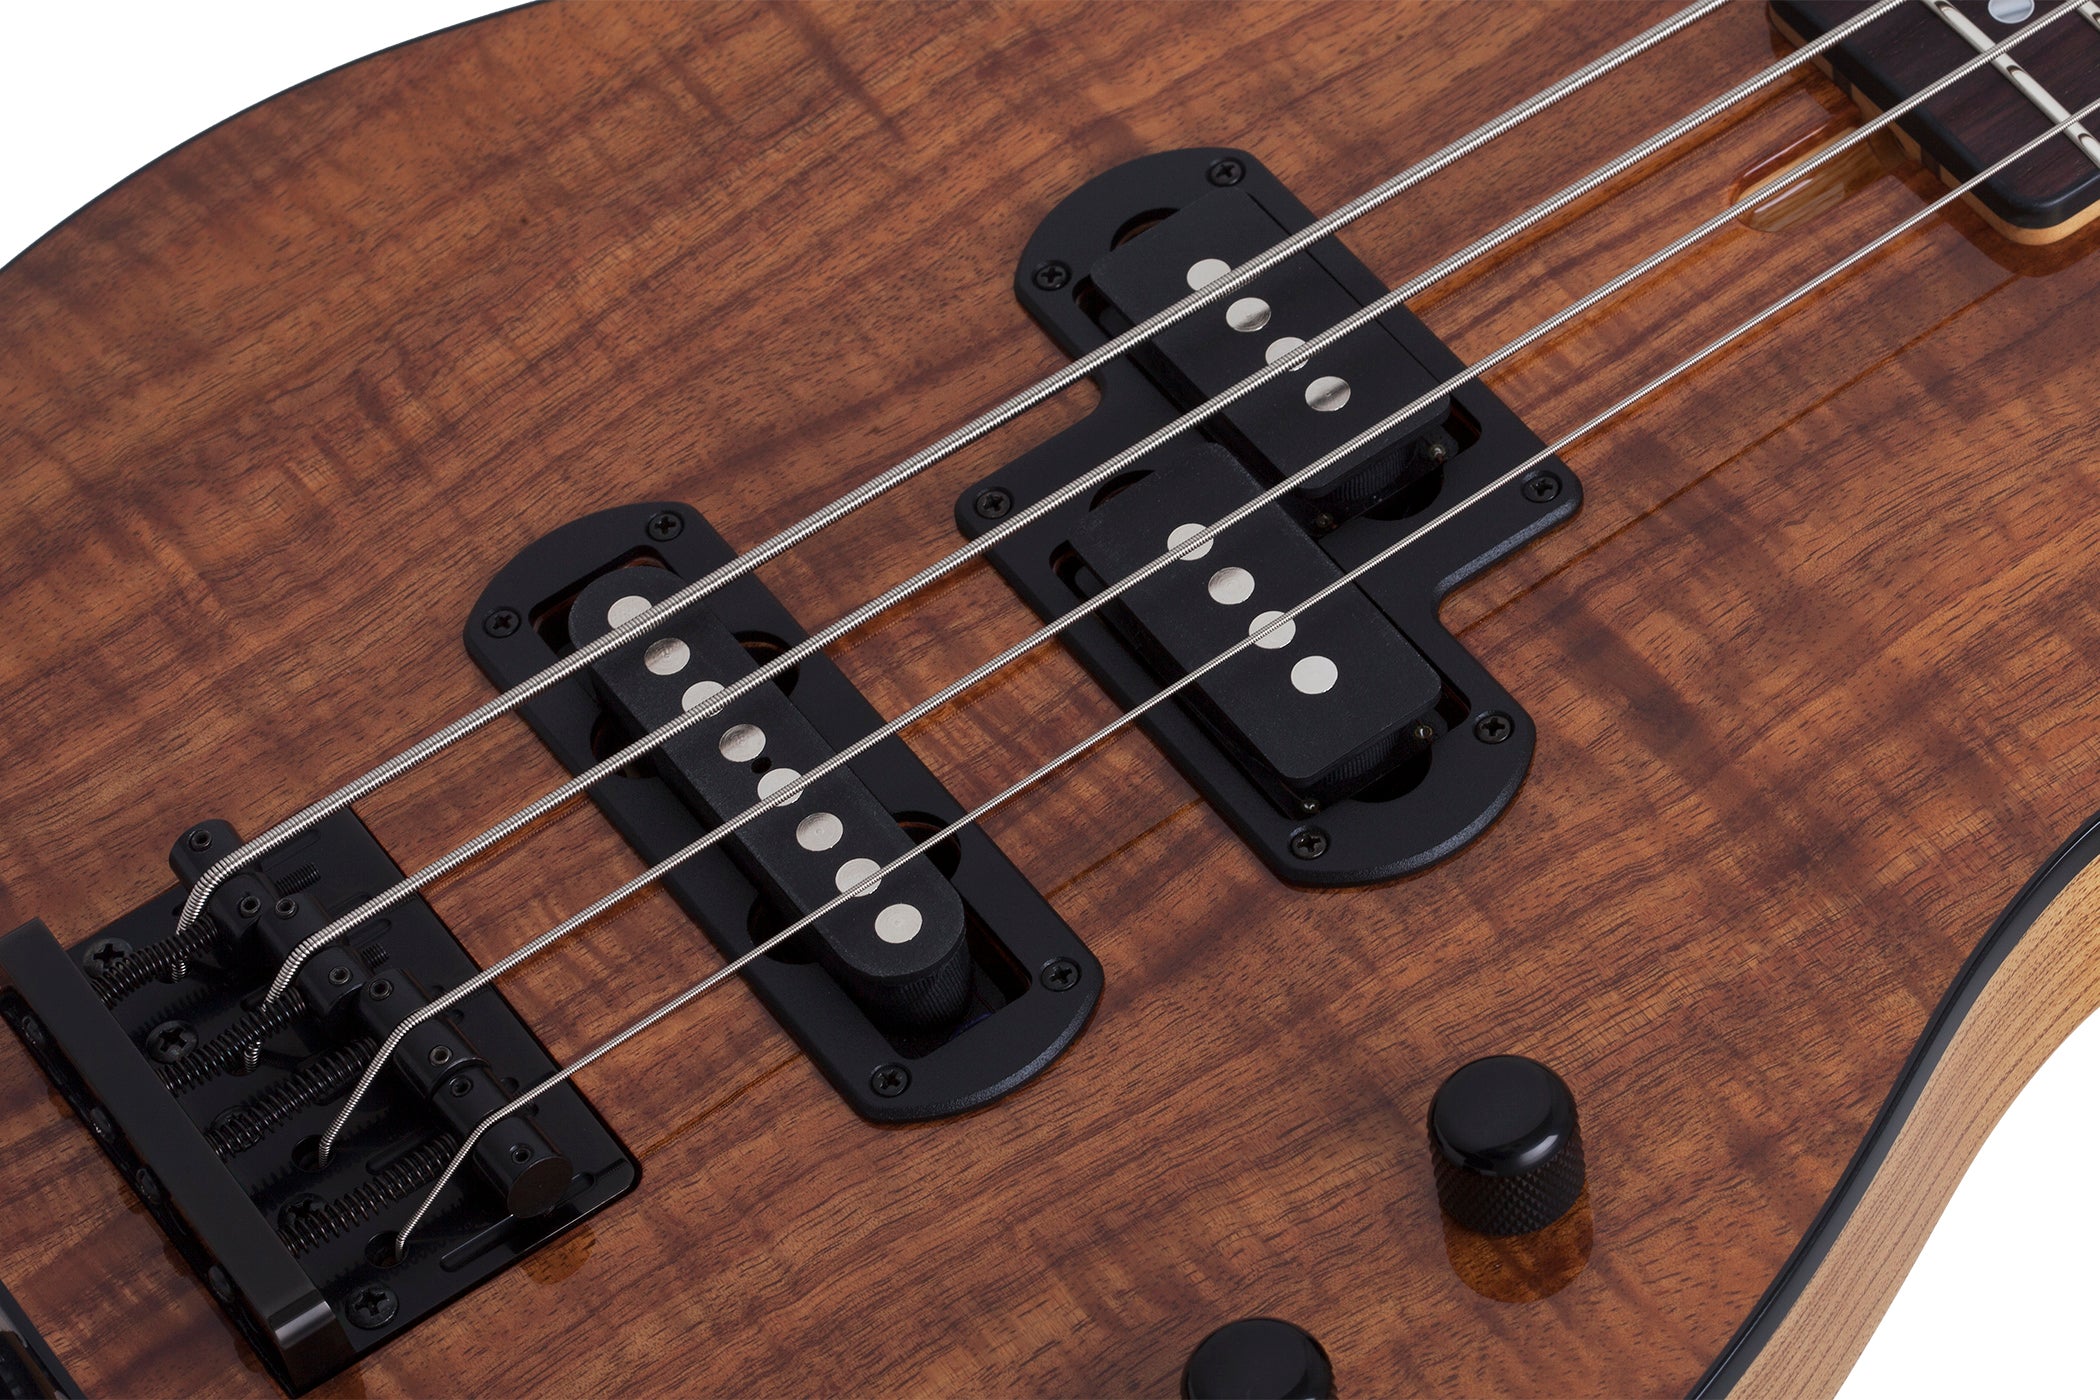 Schecter Michael Anthony Koa Top USA Signature Electric Bass Koa with Natural Gloss 7058-SHC